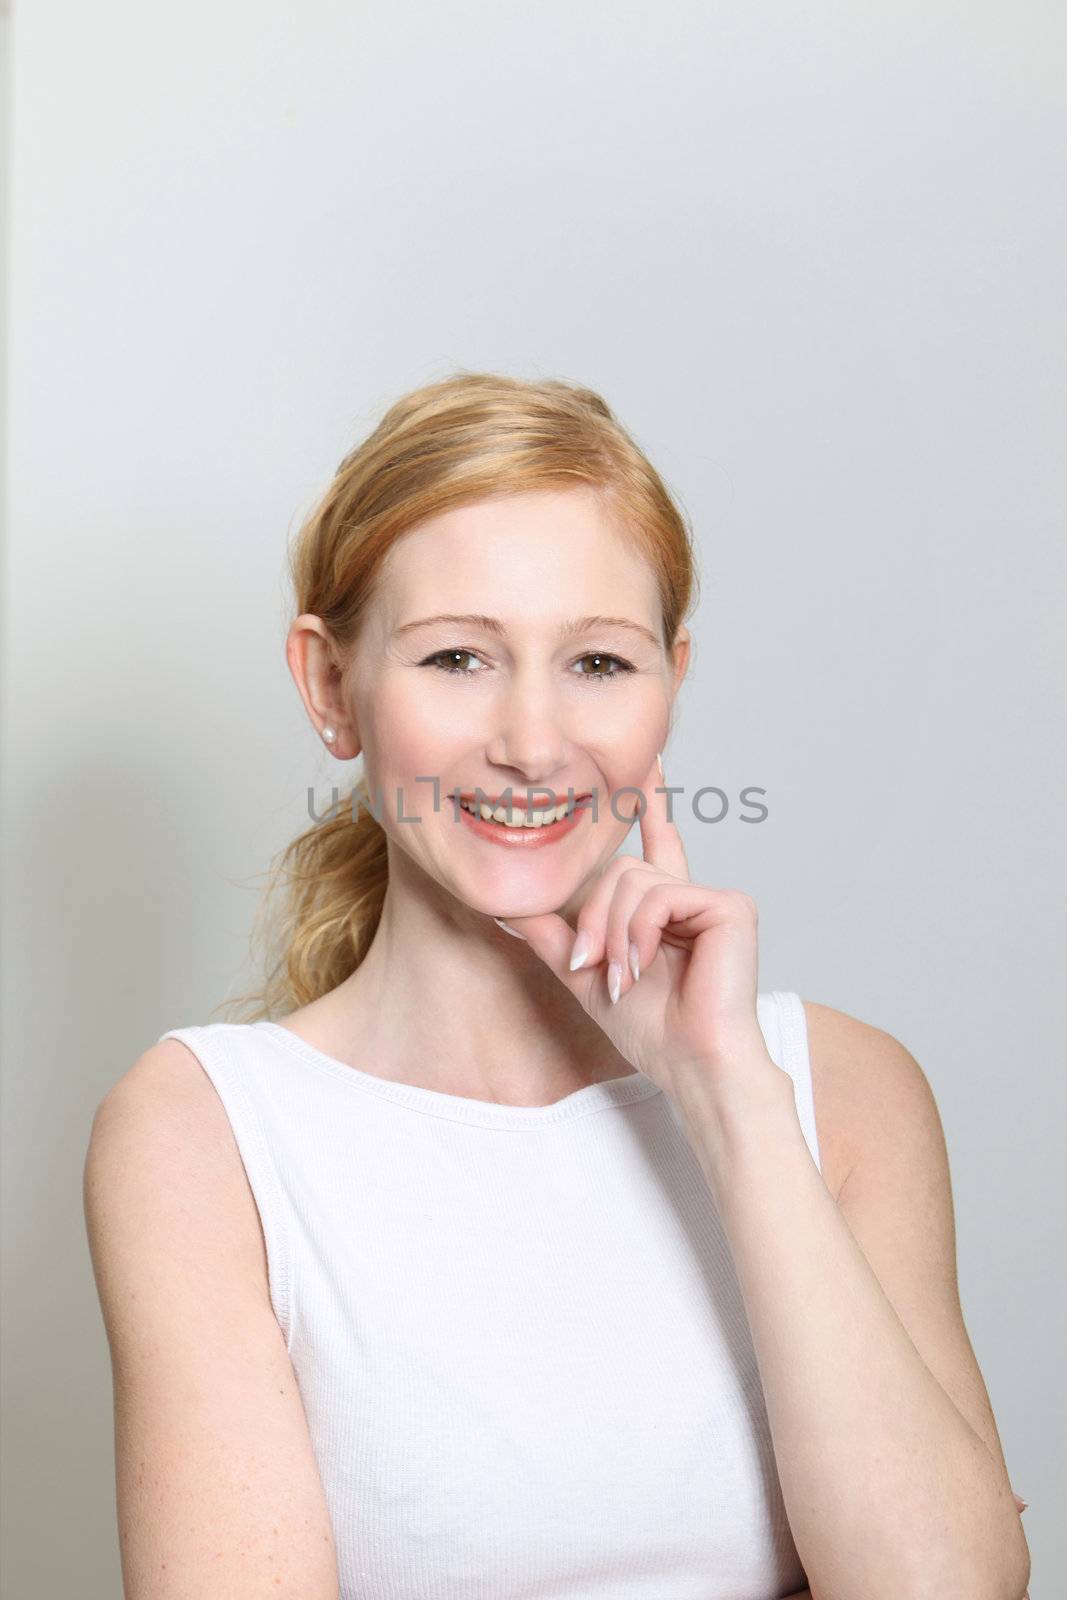 Portait of a young, smiling woman - portrait format